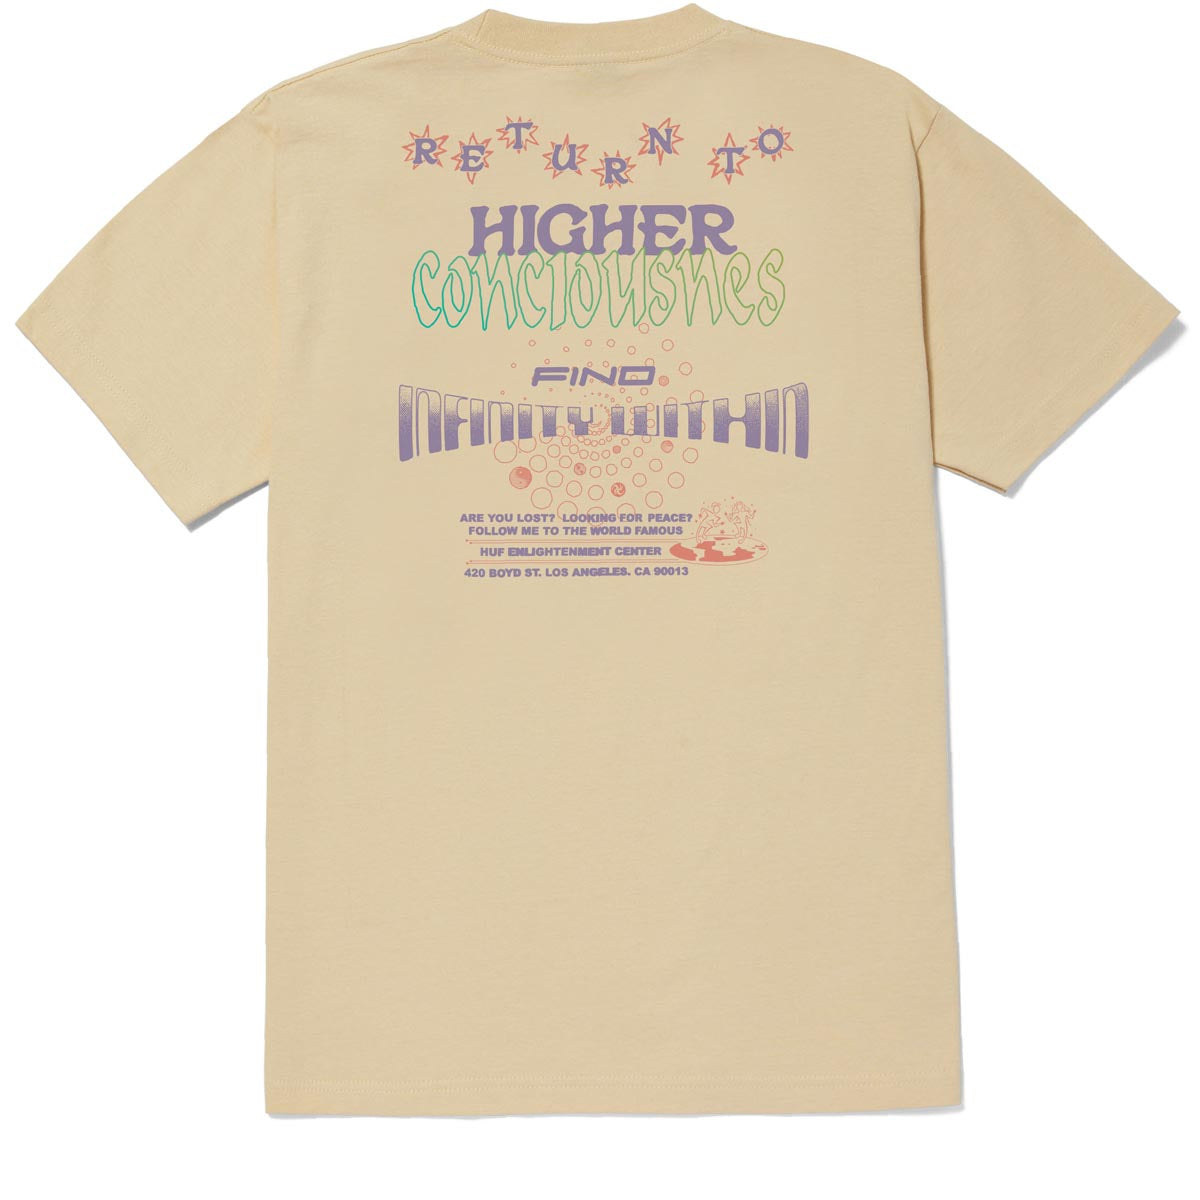 HUF Enlightenment Center T-Shirt - Wheat image 2